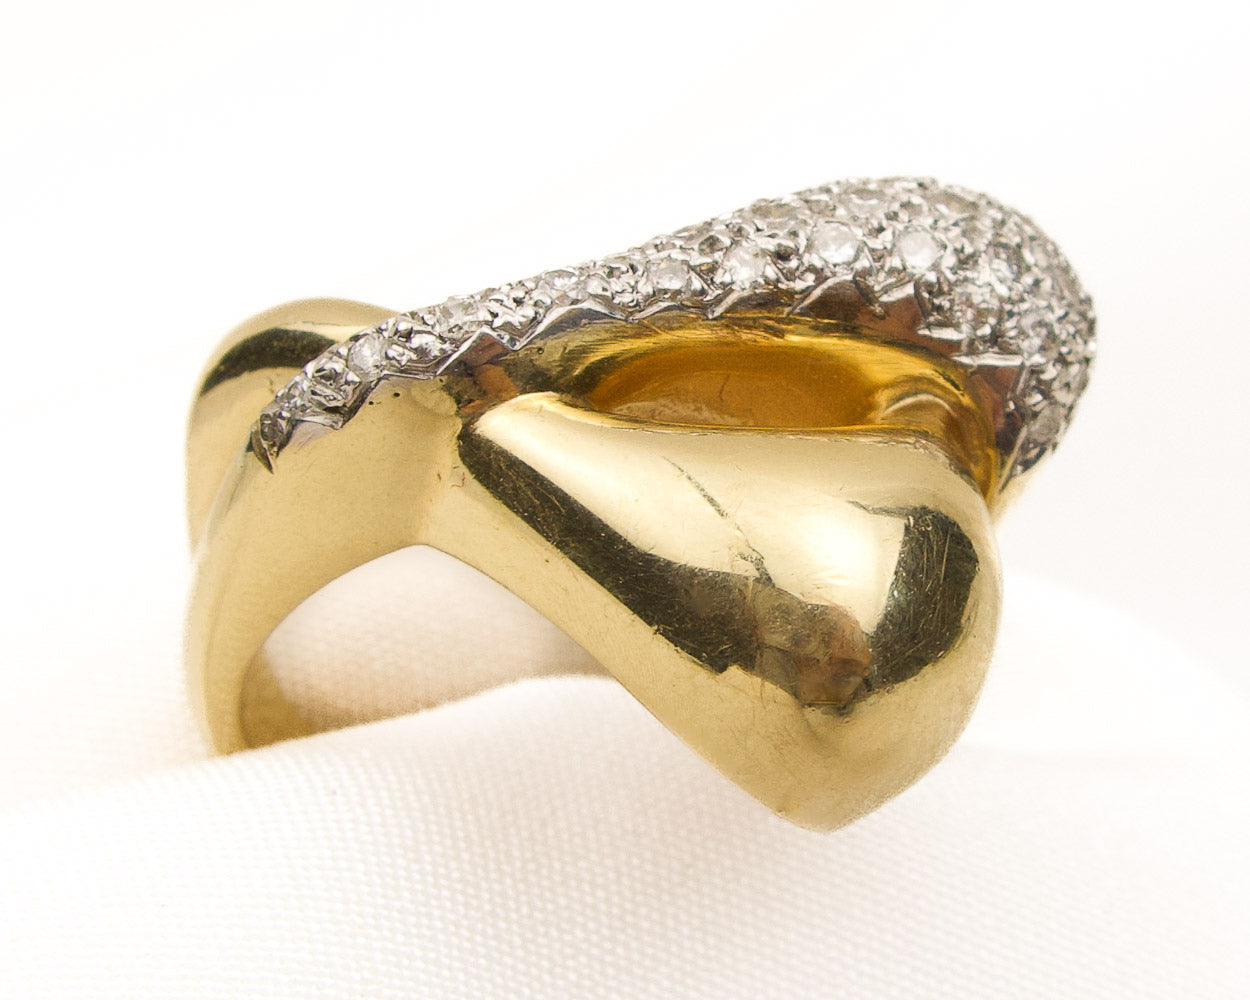 Late-Midcentury Modernist Diamond Ring